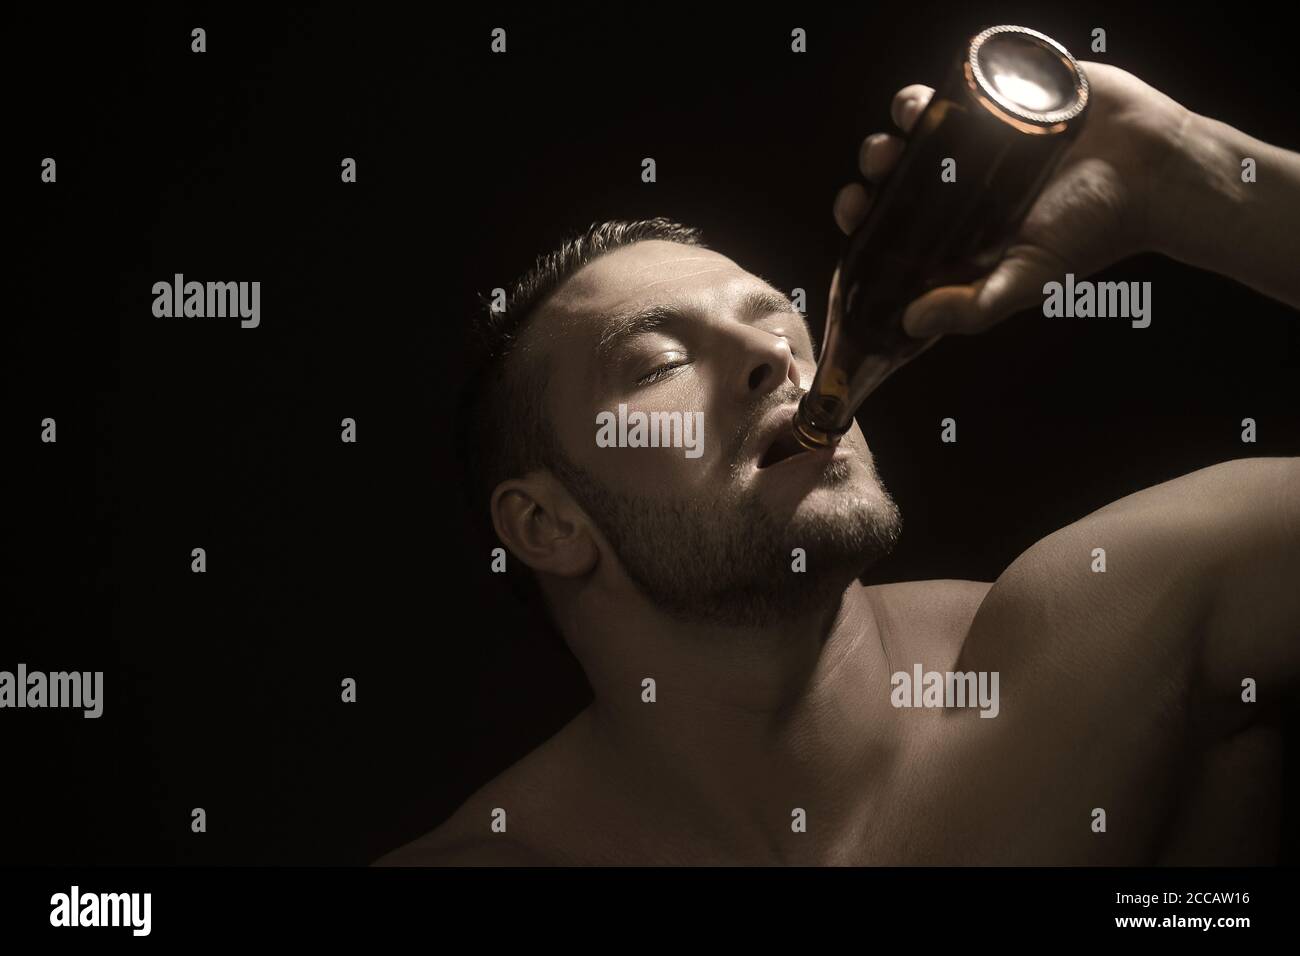 Stylish muscular guy enjoys the taste of craft beer. Studio photo against a dark background. Stock Photo